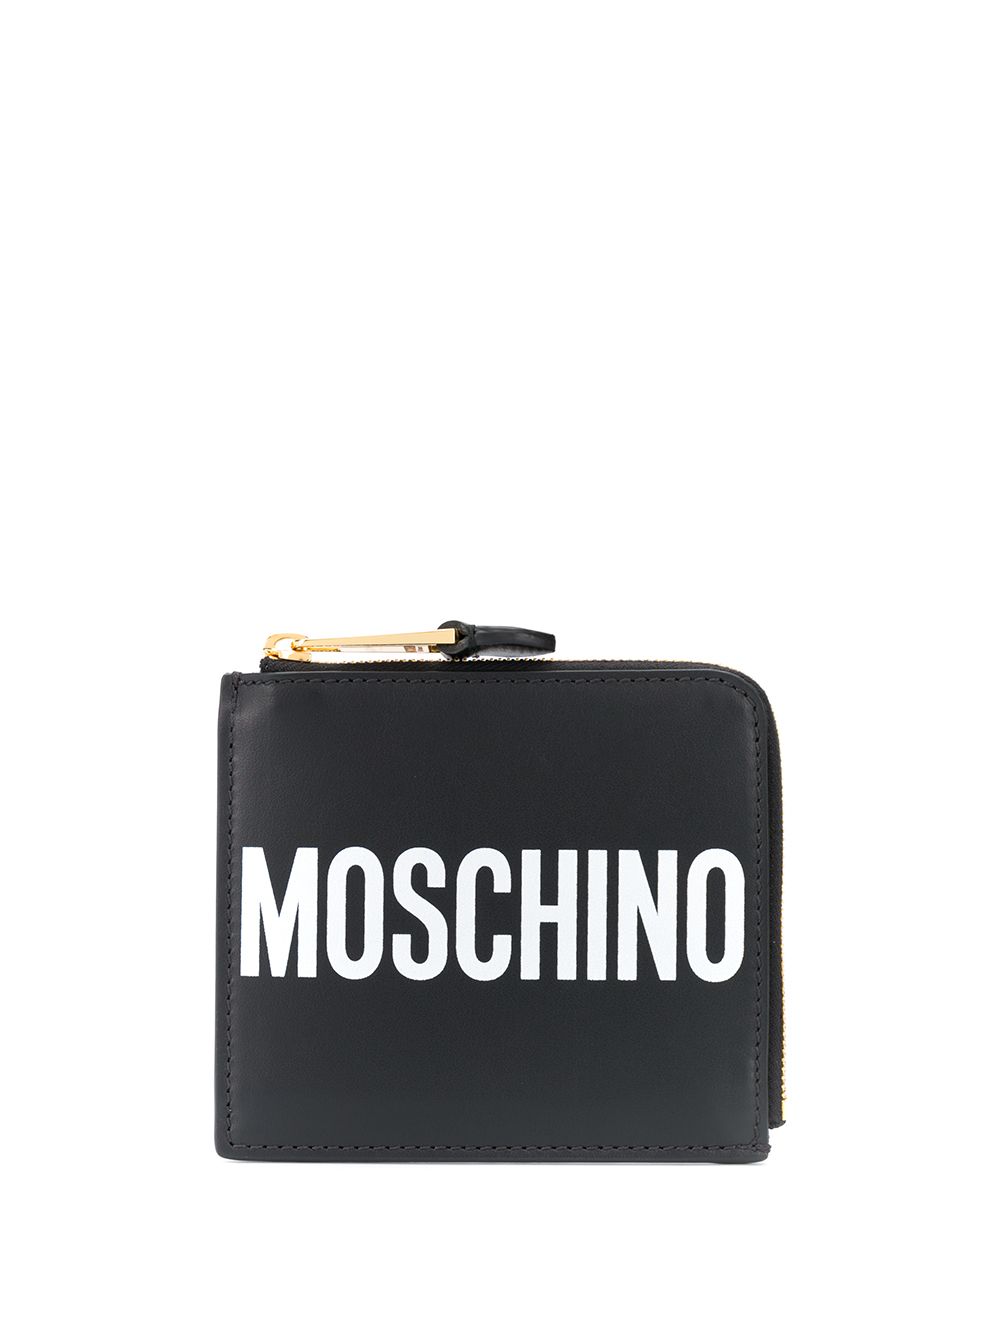 фото Moschino кошелек на молнии с логотипом